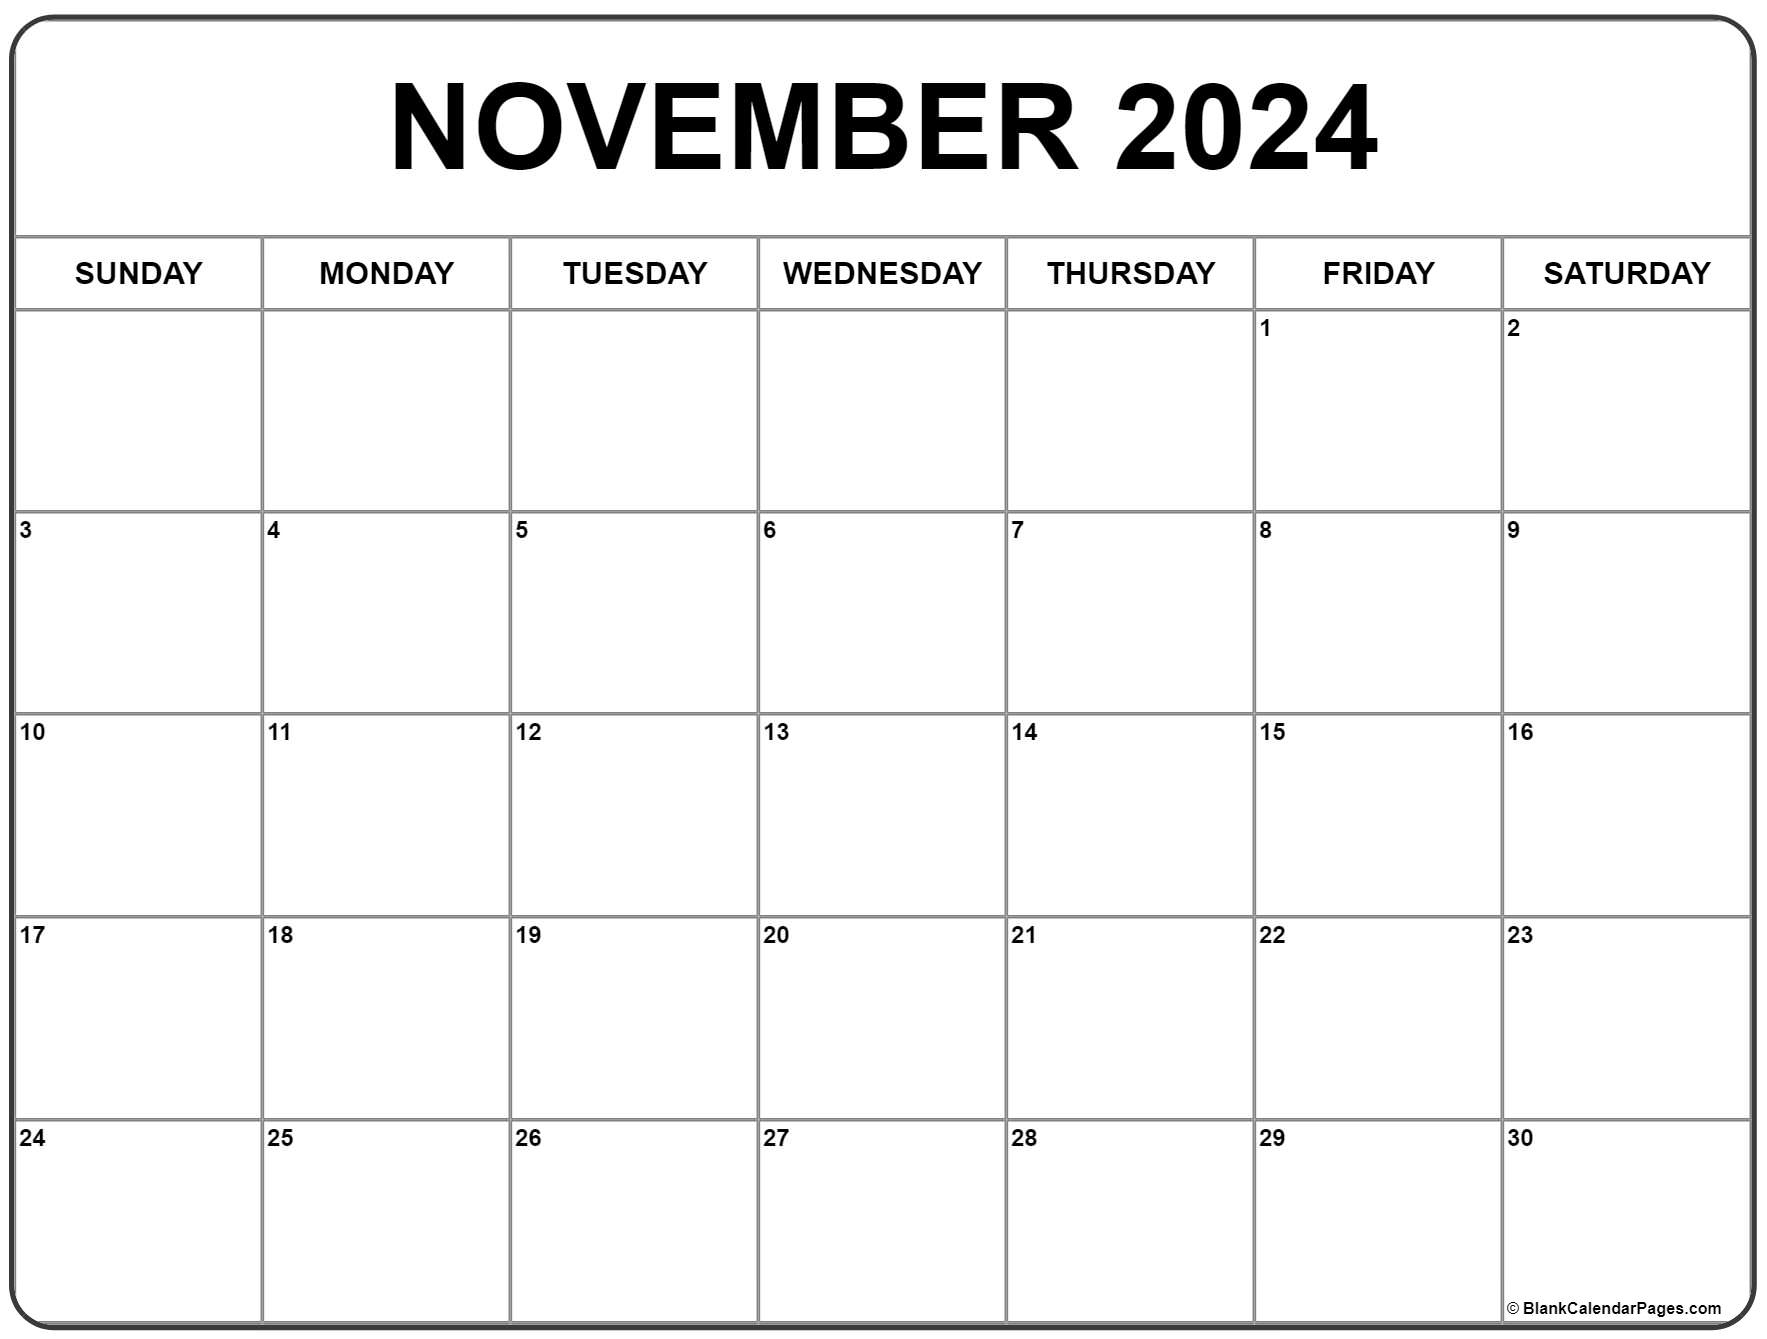 November 2024 Calendar Free Printable Calendar | Free Printable 2024 November Calendar Templates